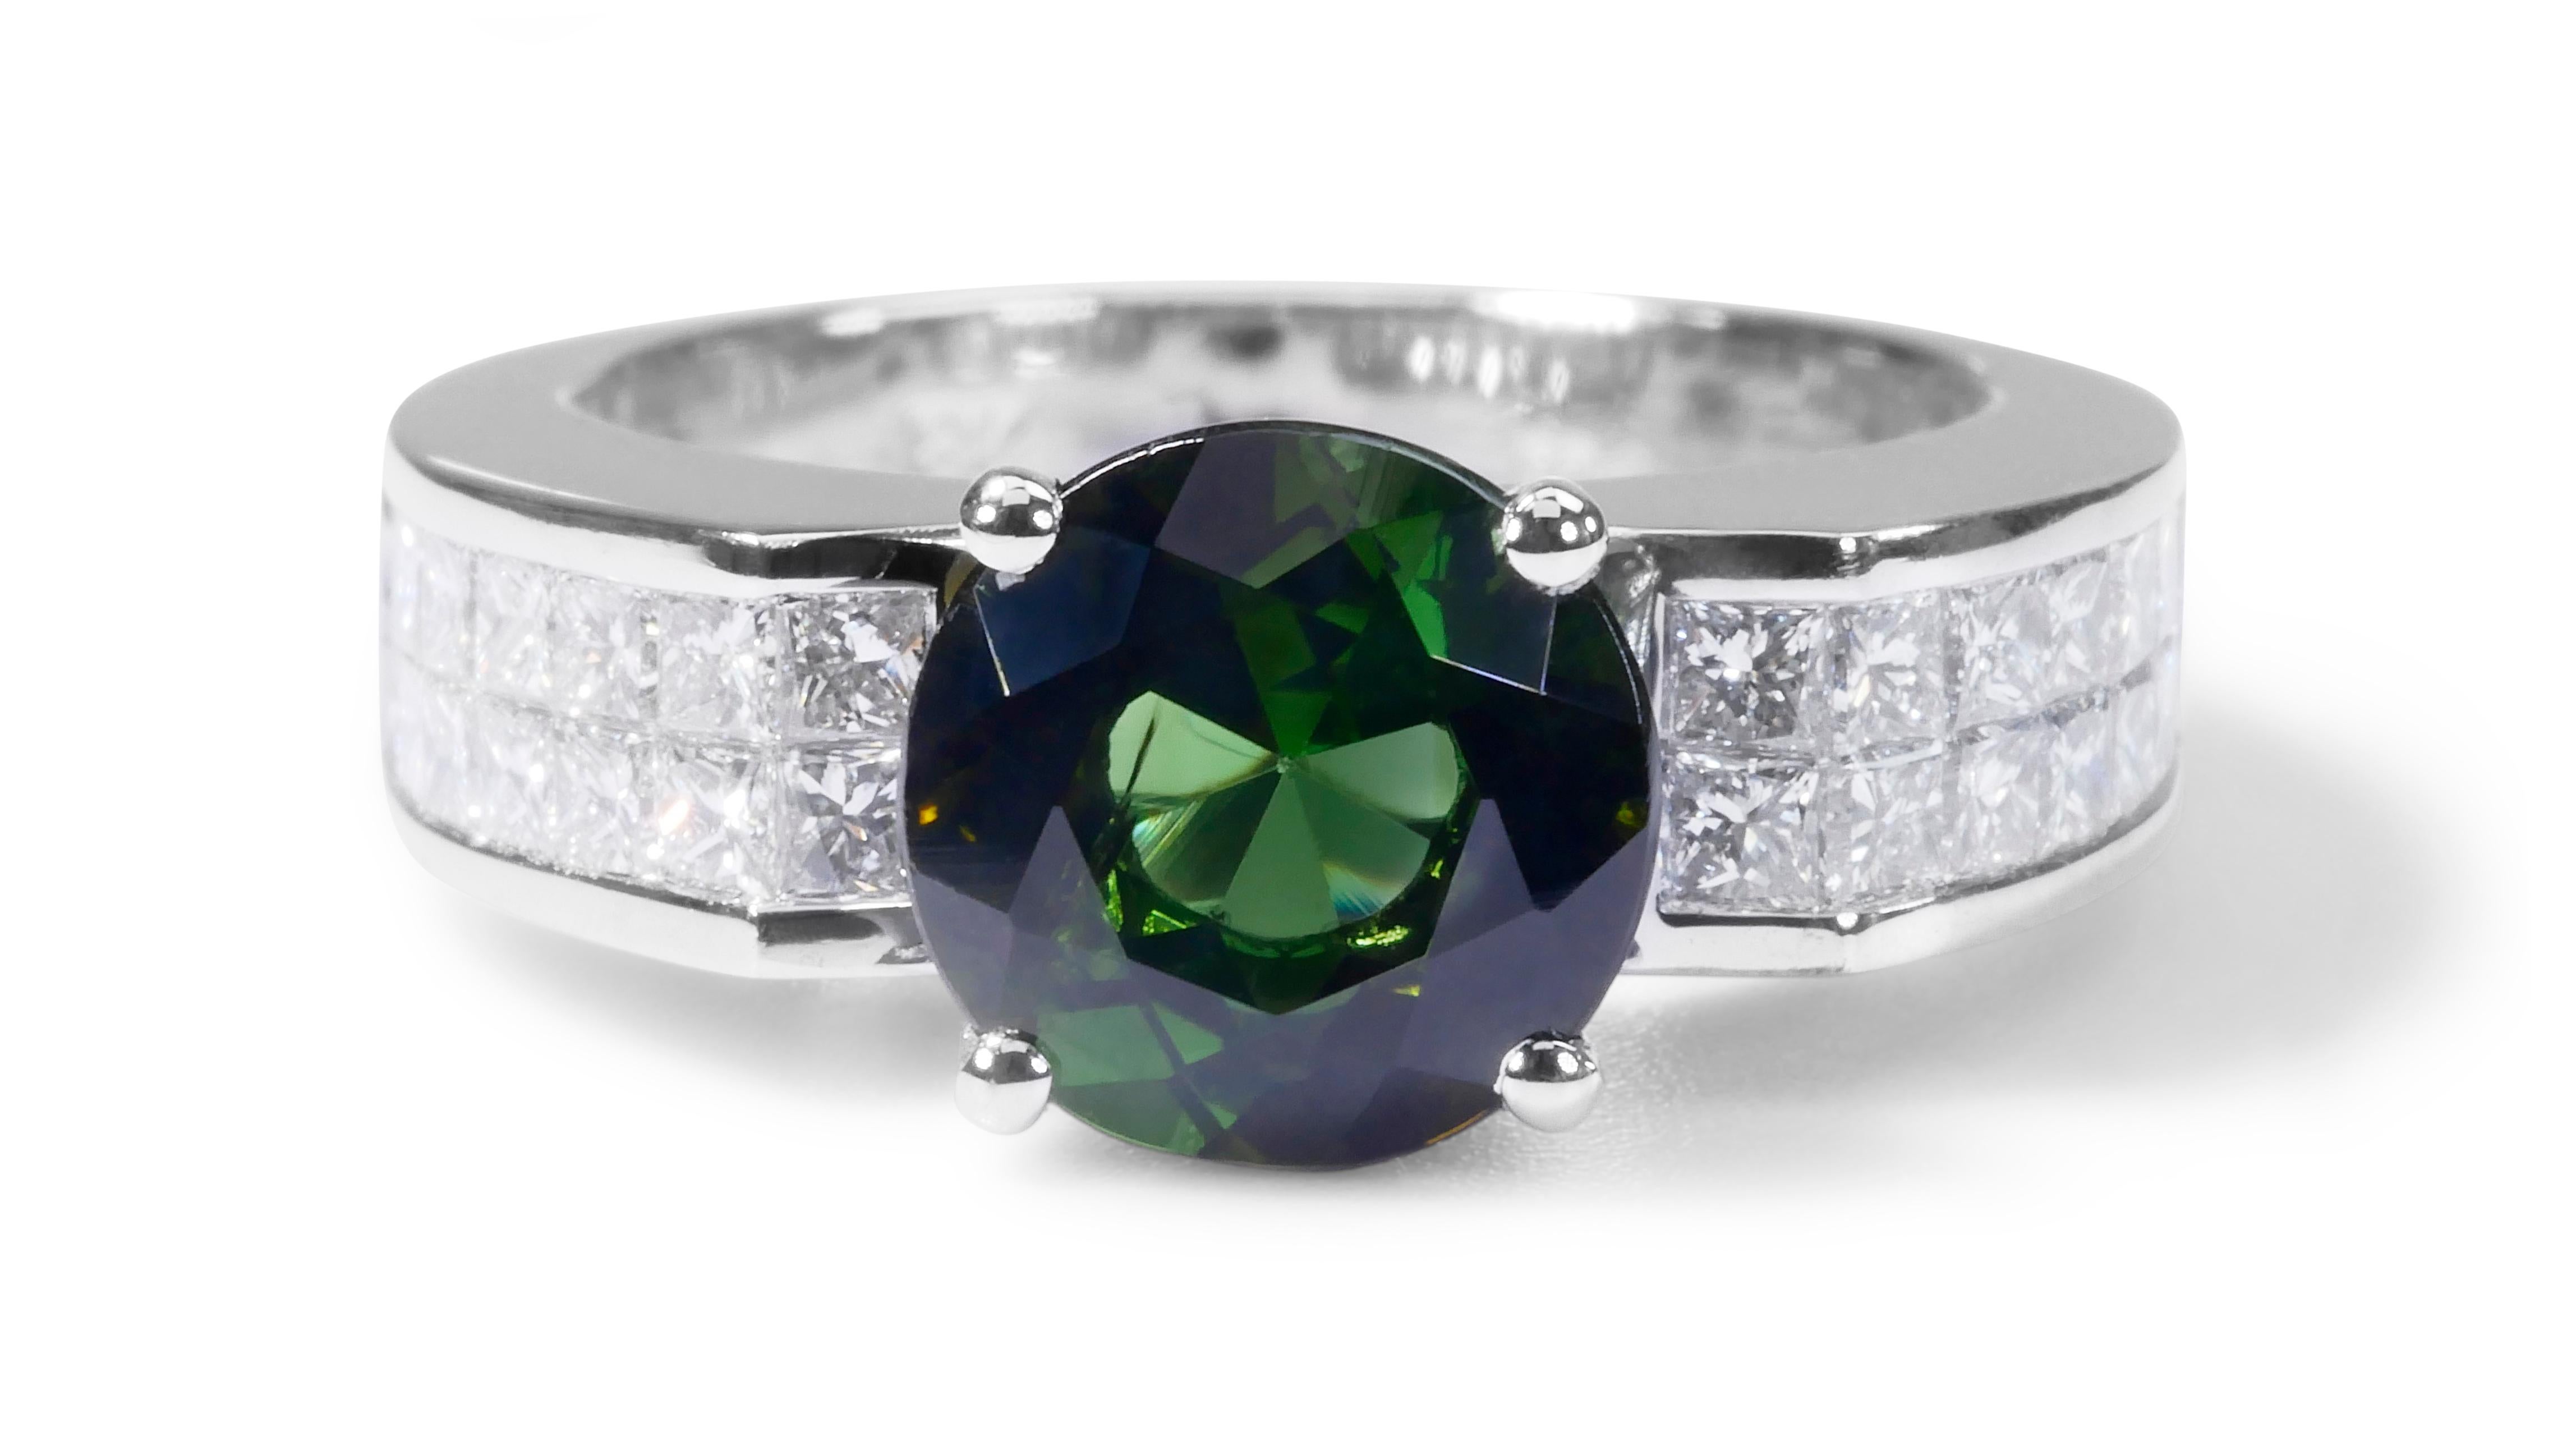 Gorgeous 18k Pavé Ring with 1.65 Ct Natural Tourmaline and Diamonds, IGI Cert 4